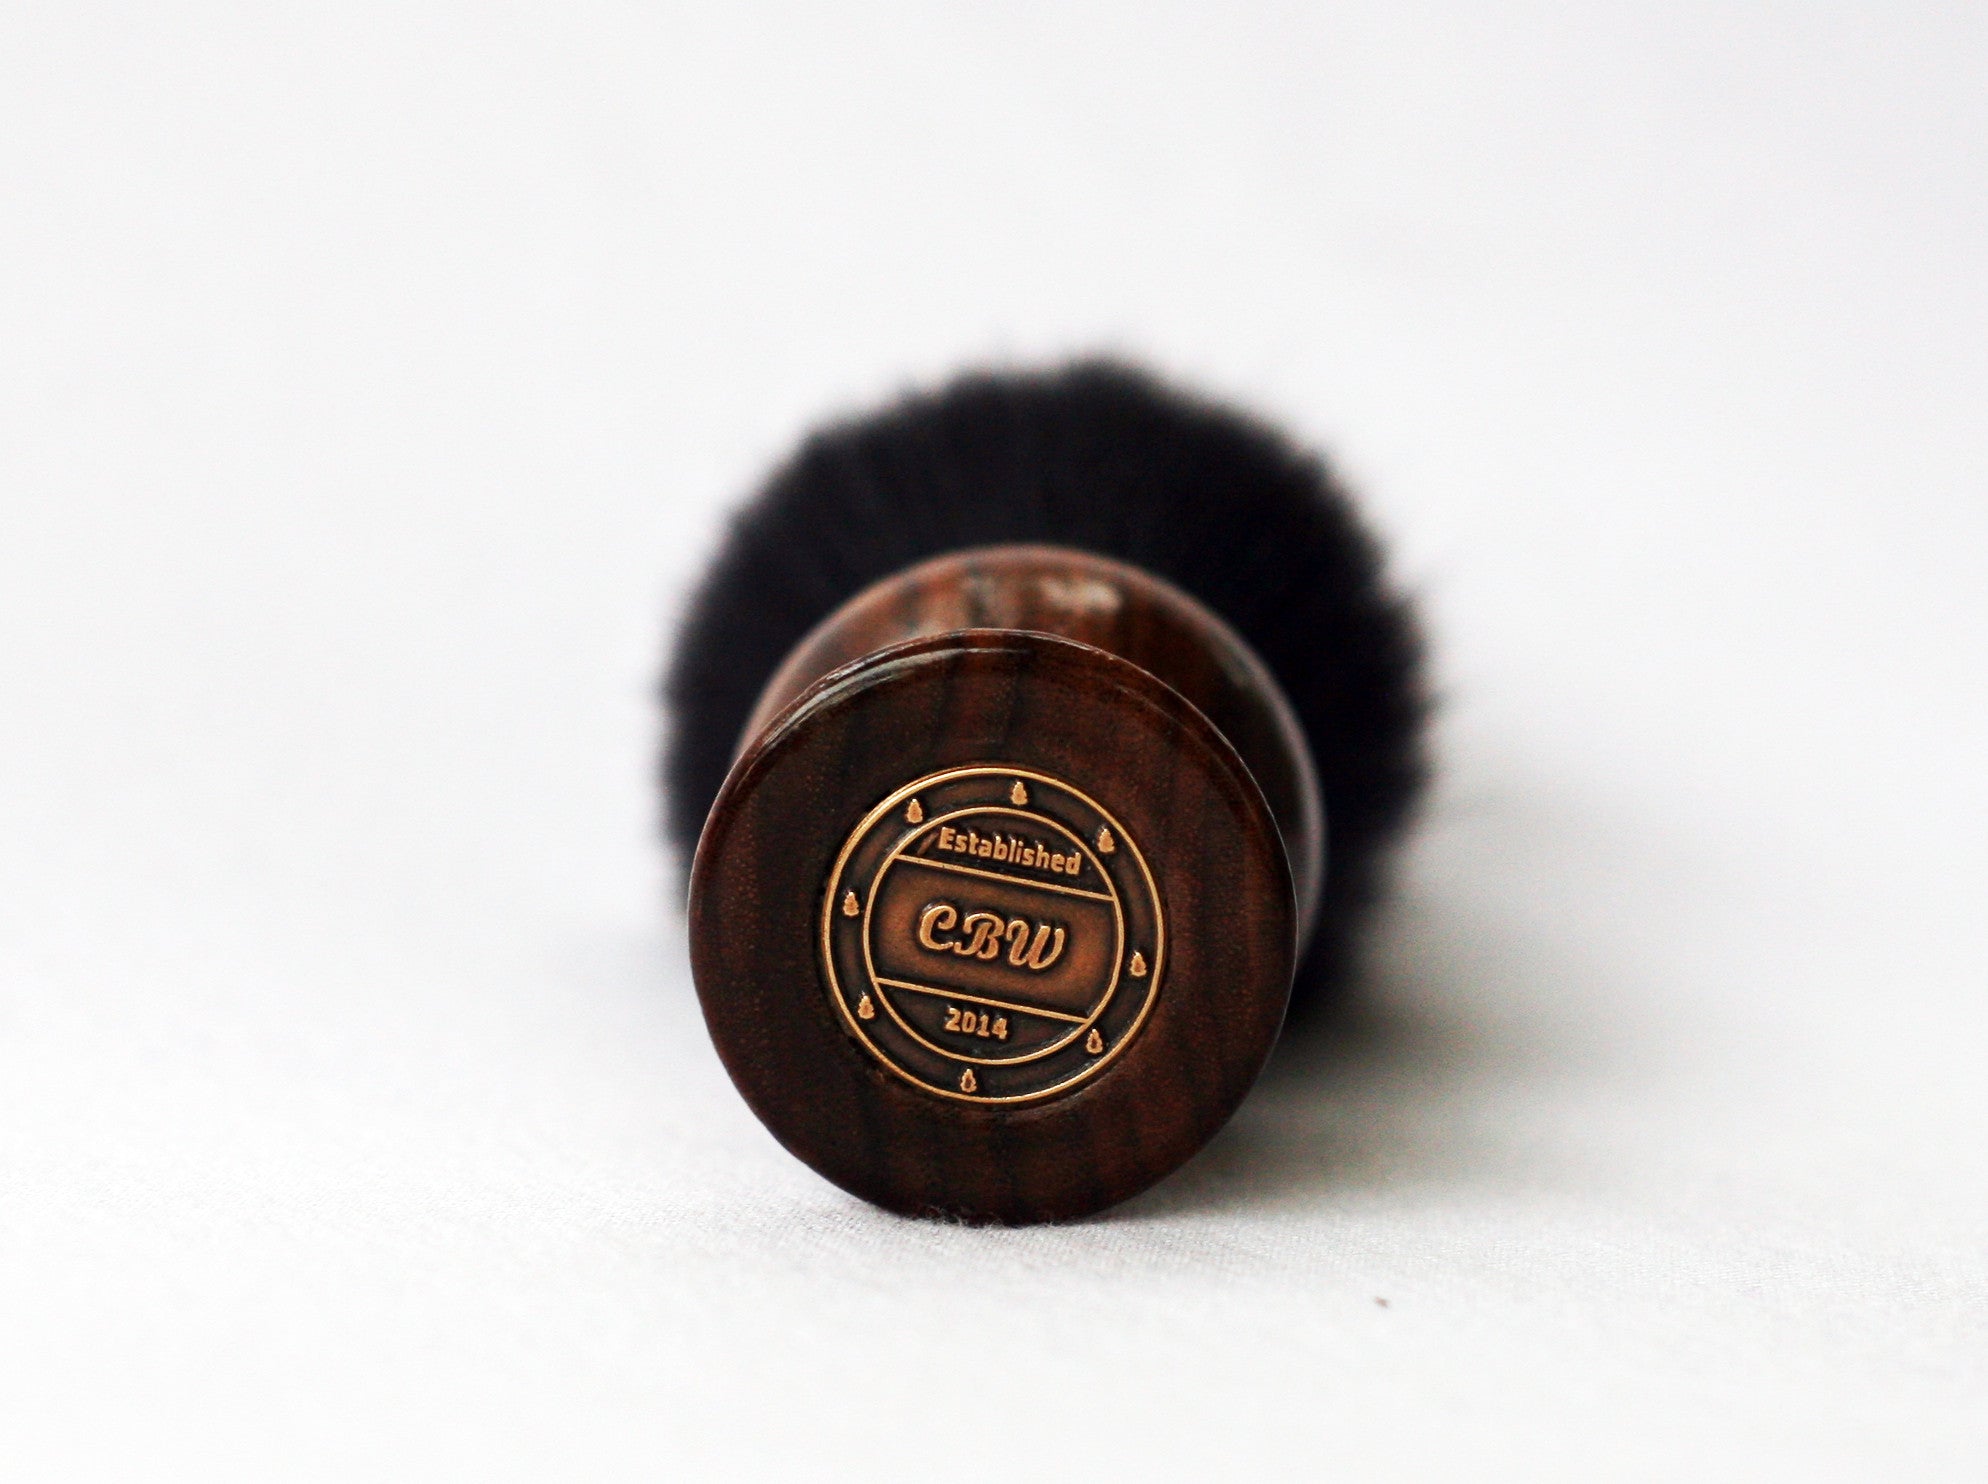 Walnut Tuxedo shave Brush - CreationsByWill